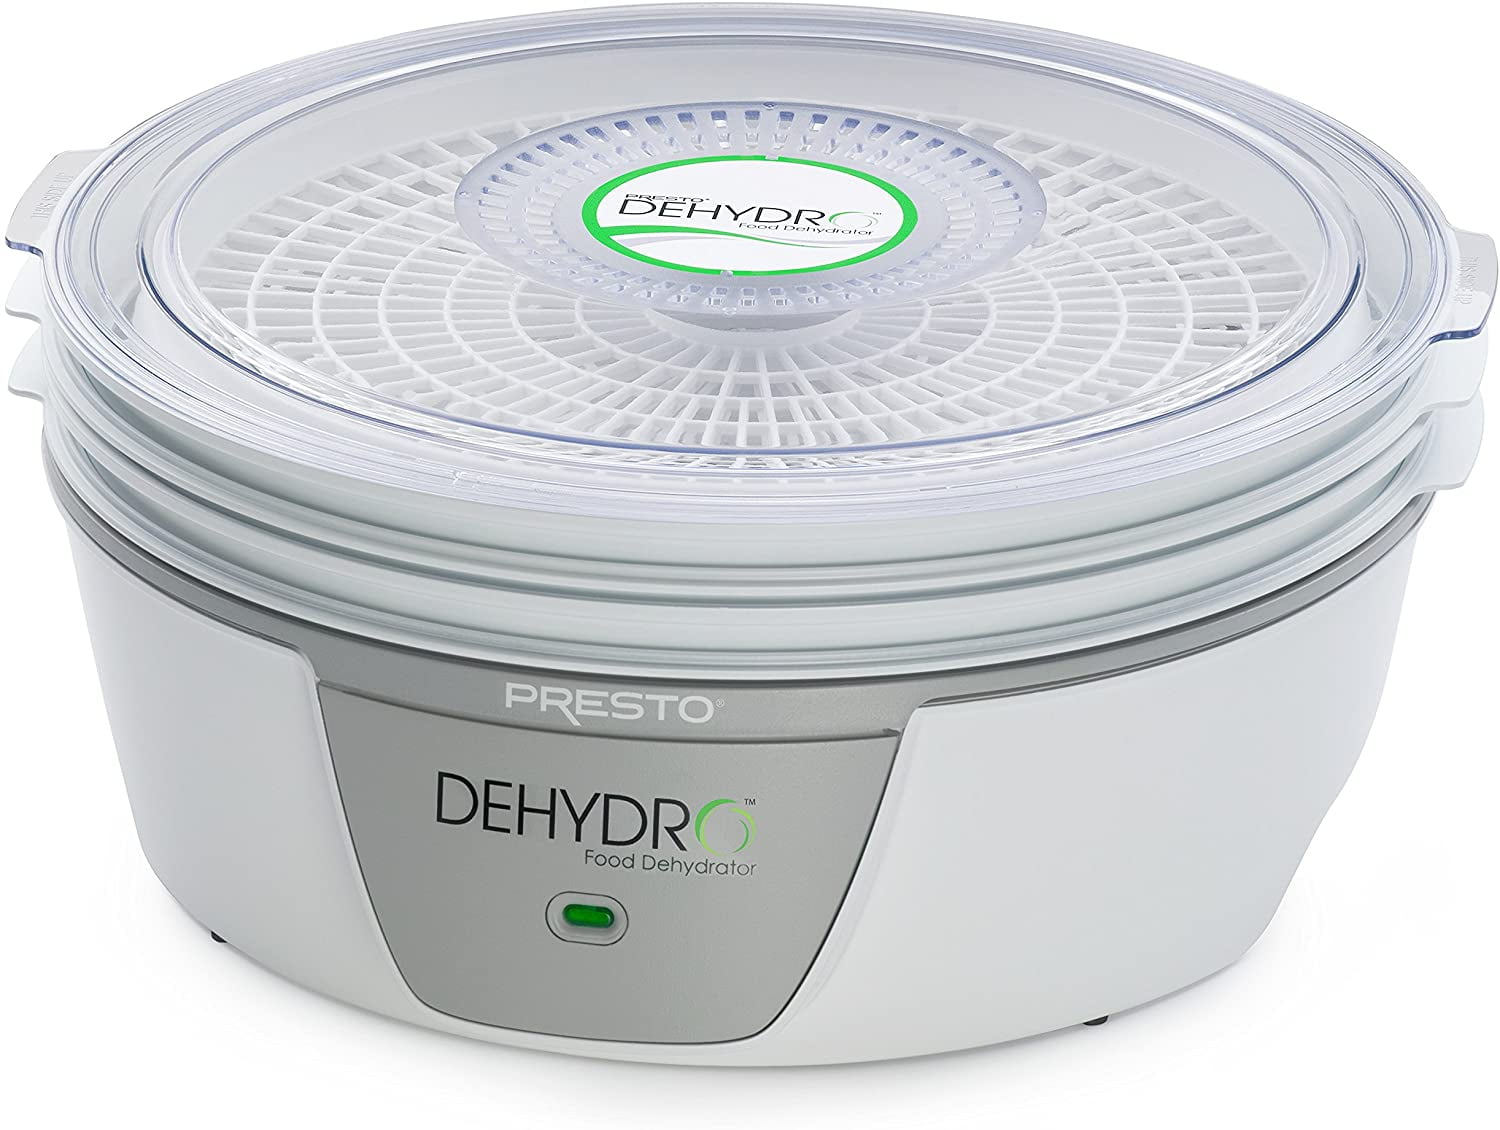 Presto 06300 Dehydro Electric Food Dehydrator Four Trays Standard 600 watts